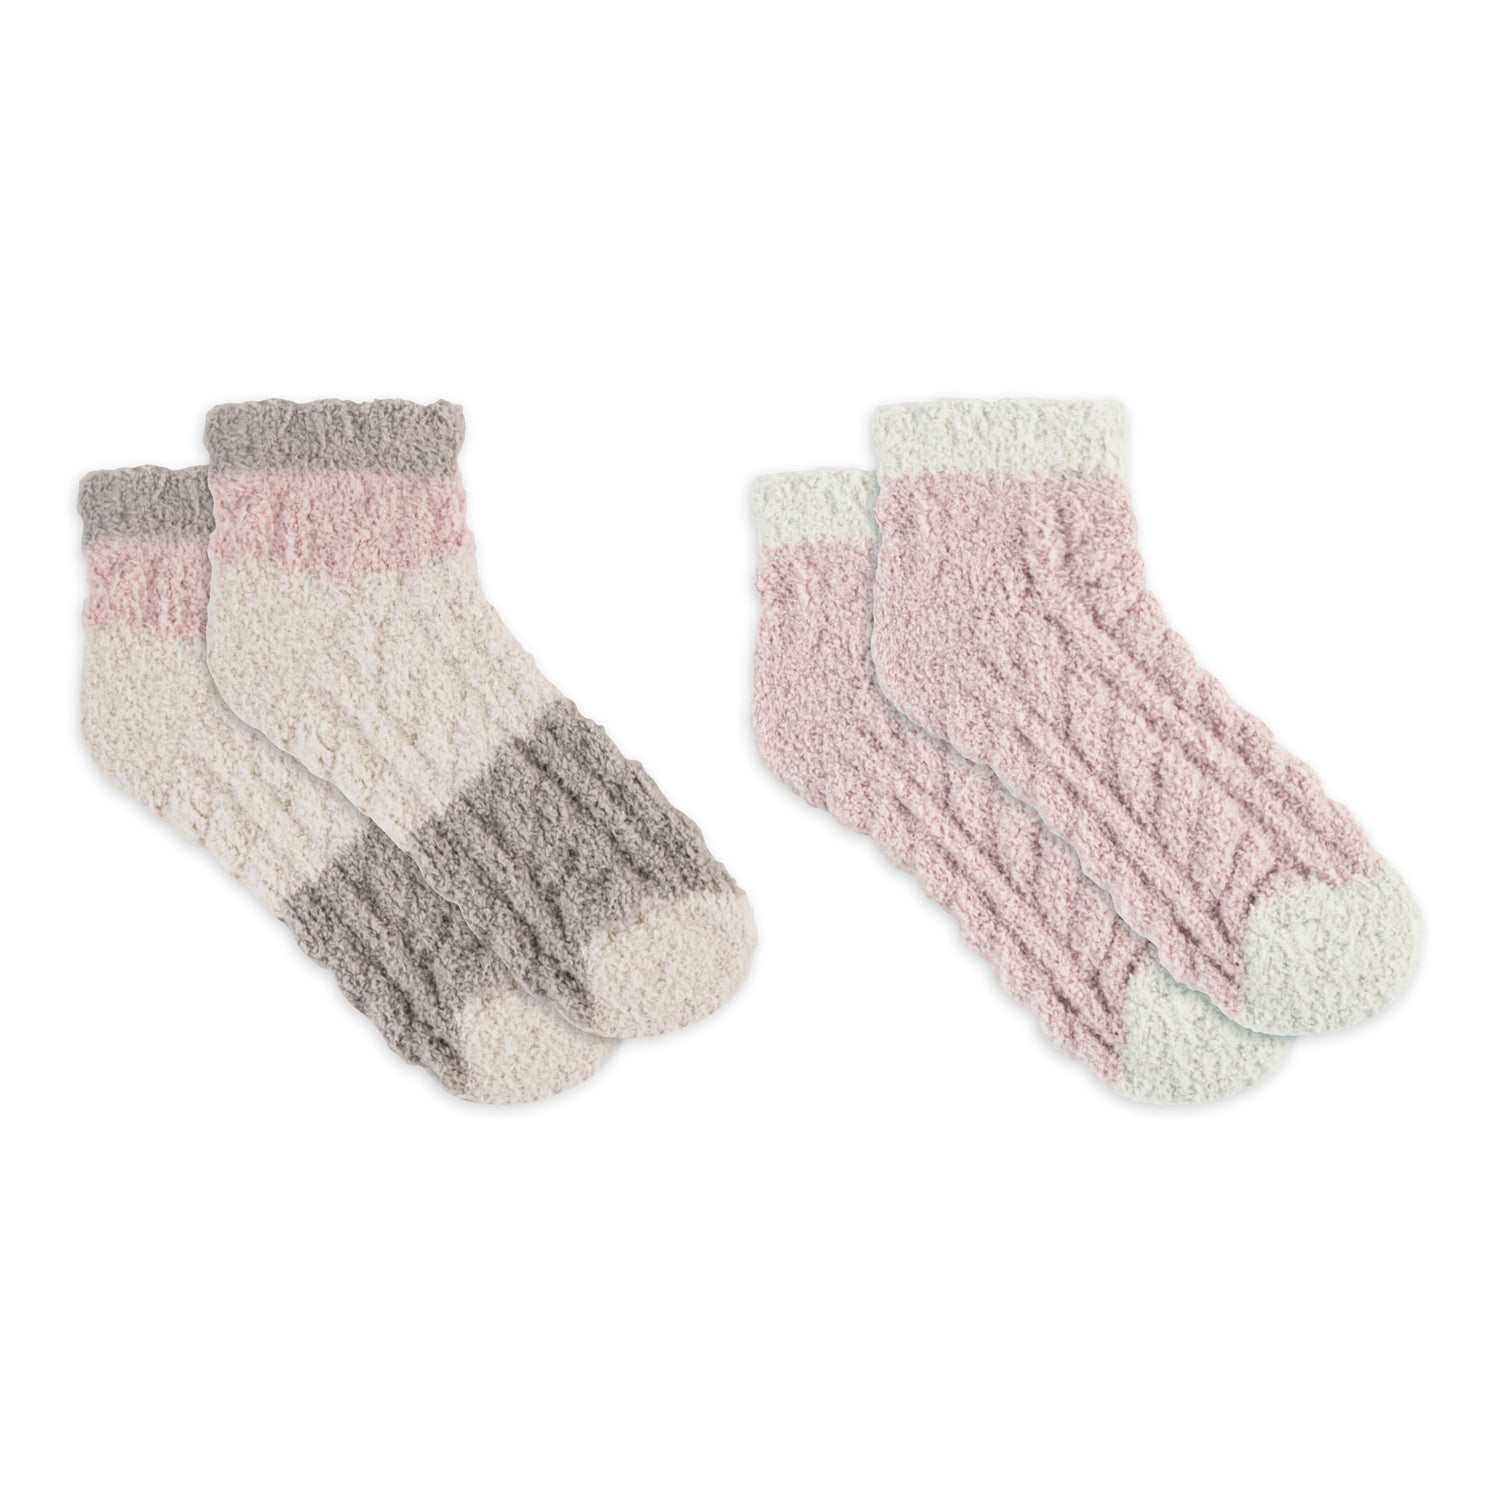 Womens Foam Colorblock Low Cut Sock -2PK